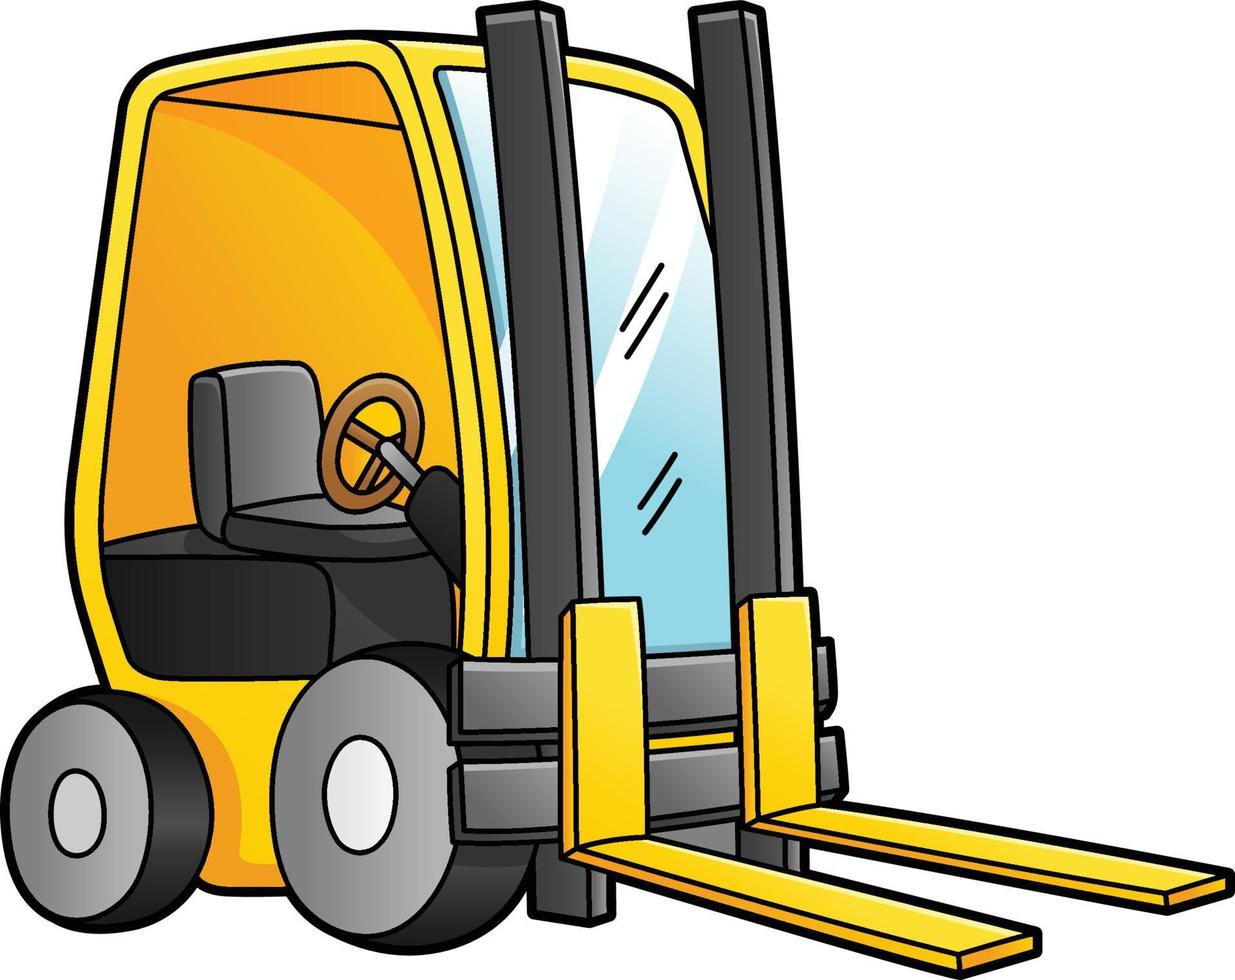 Forklift Cartoon Clipart Colored Illustration vector